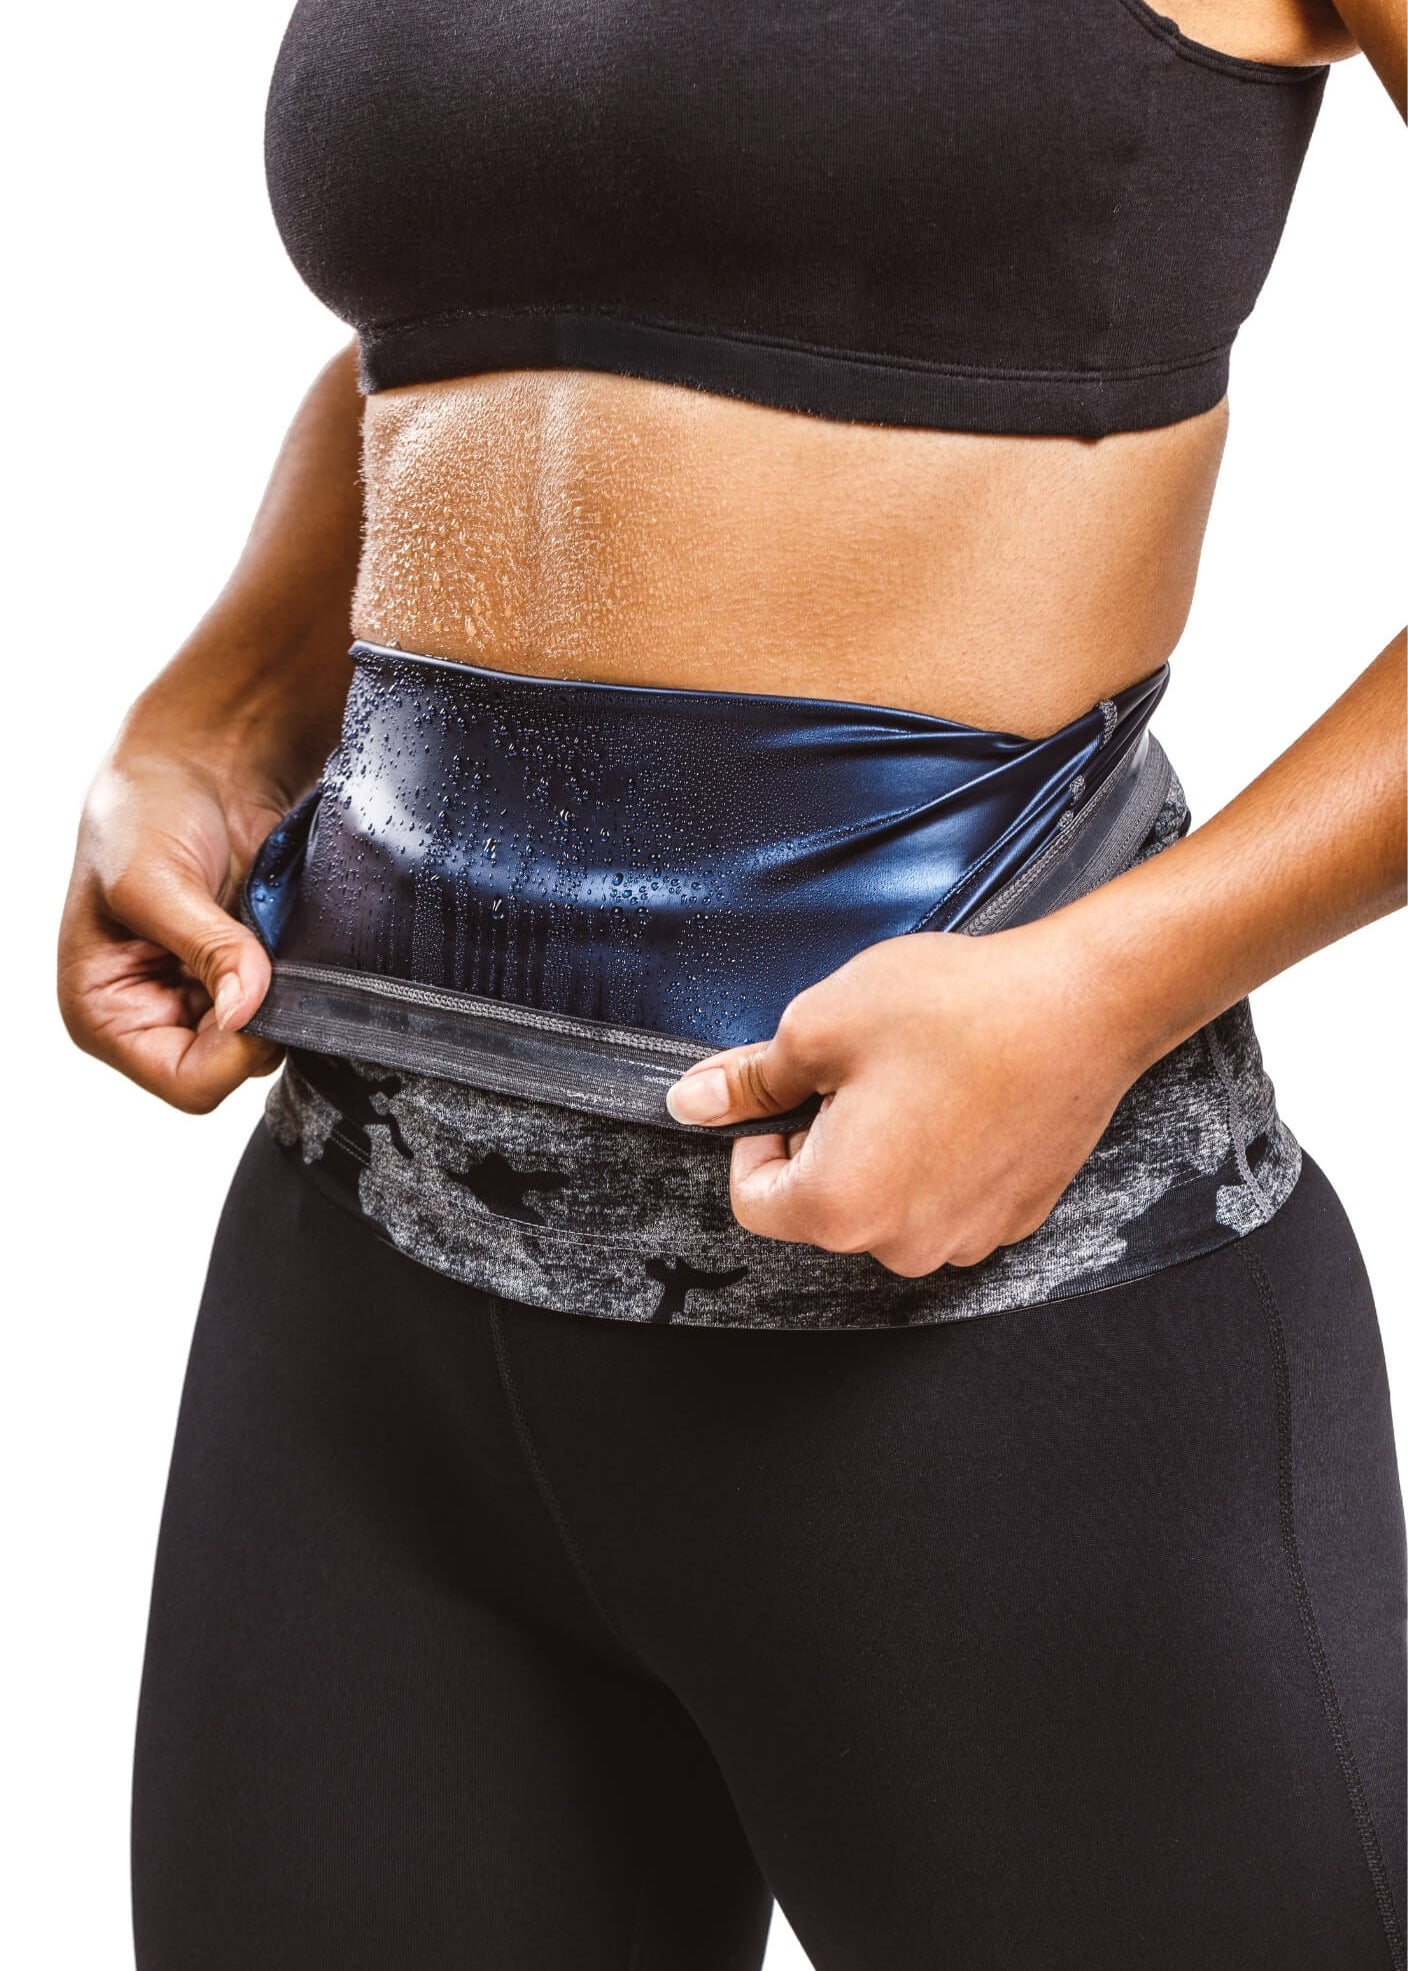 Sweat Waist Trainer for Women Two Belts Workout Corset Cincher Trimmer  Shaper